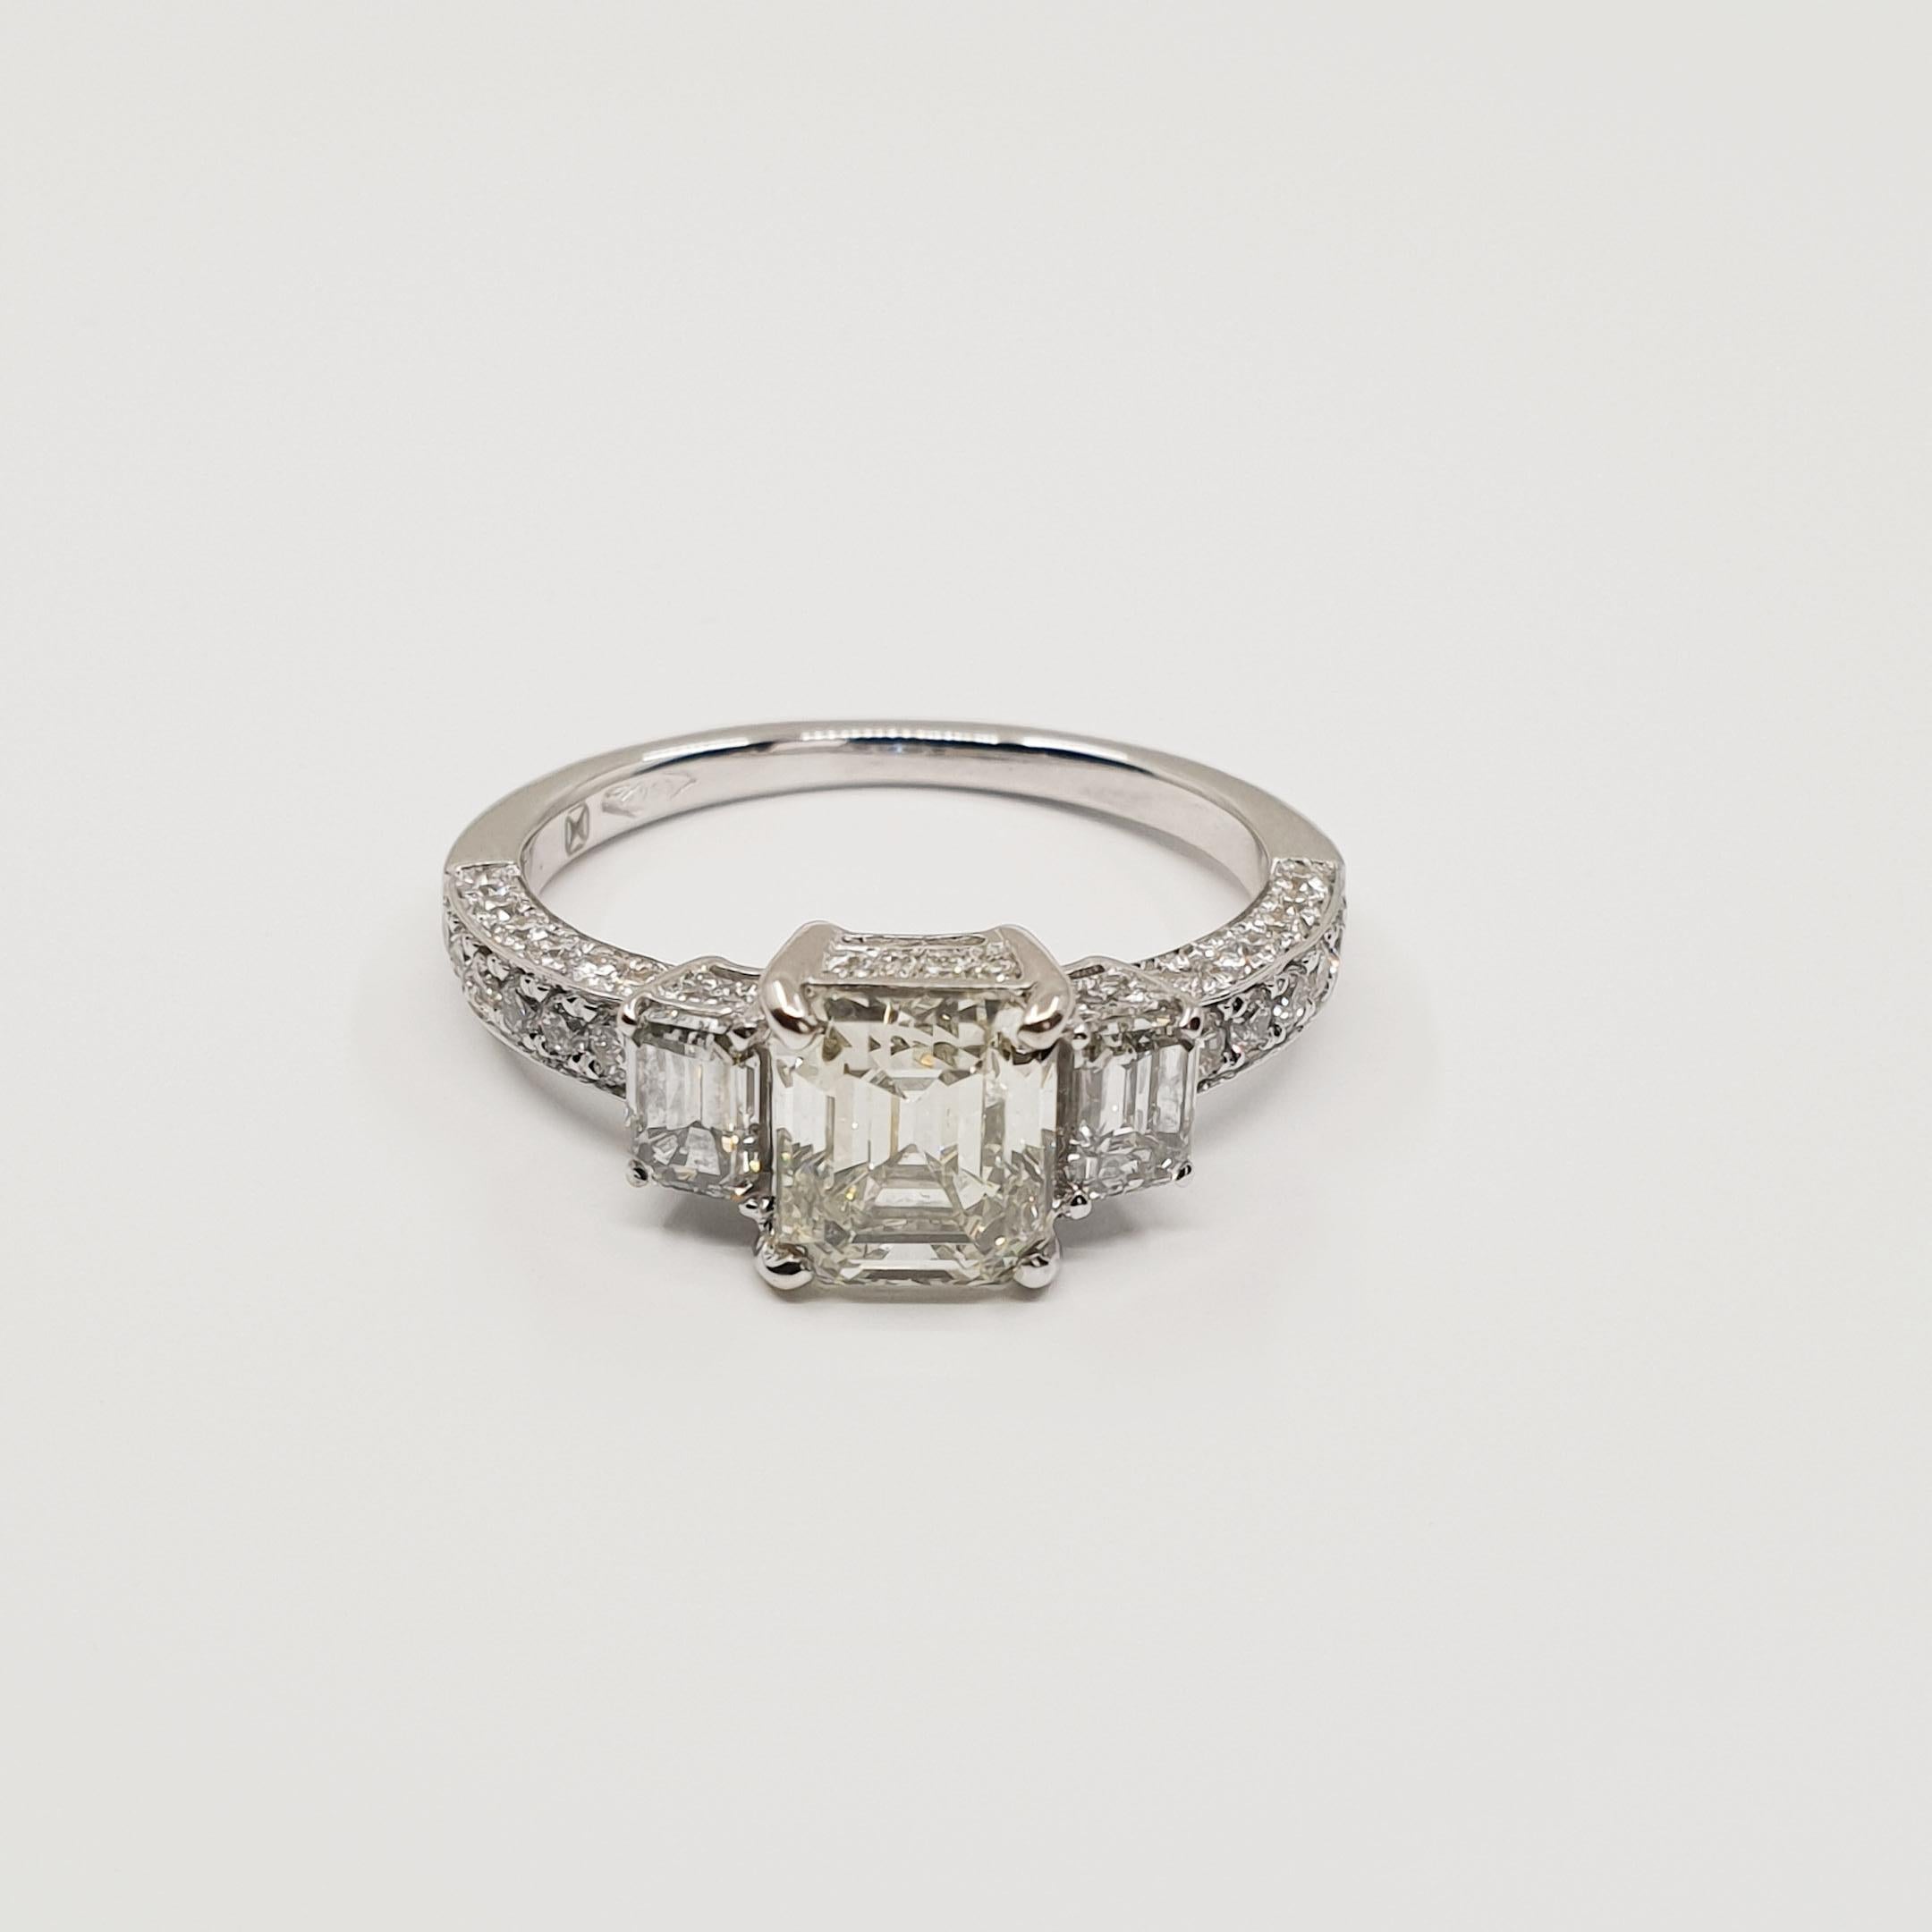 1.63 Carat Asscher Diamond Ring I/VVS 18k Gold, Baguette and Brilliant Sides

Exceptional 1.63 Carat Asscher Cut Diamond Ring with two Baguette side stones total 0.55 Carat and 
0.57 Brilliant Cut Pave Diamonds. 
Stunning Piece of High Jewelry whith